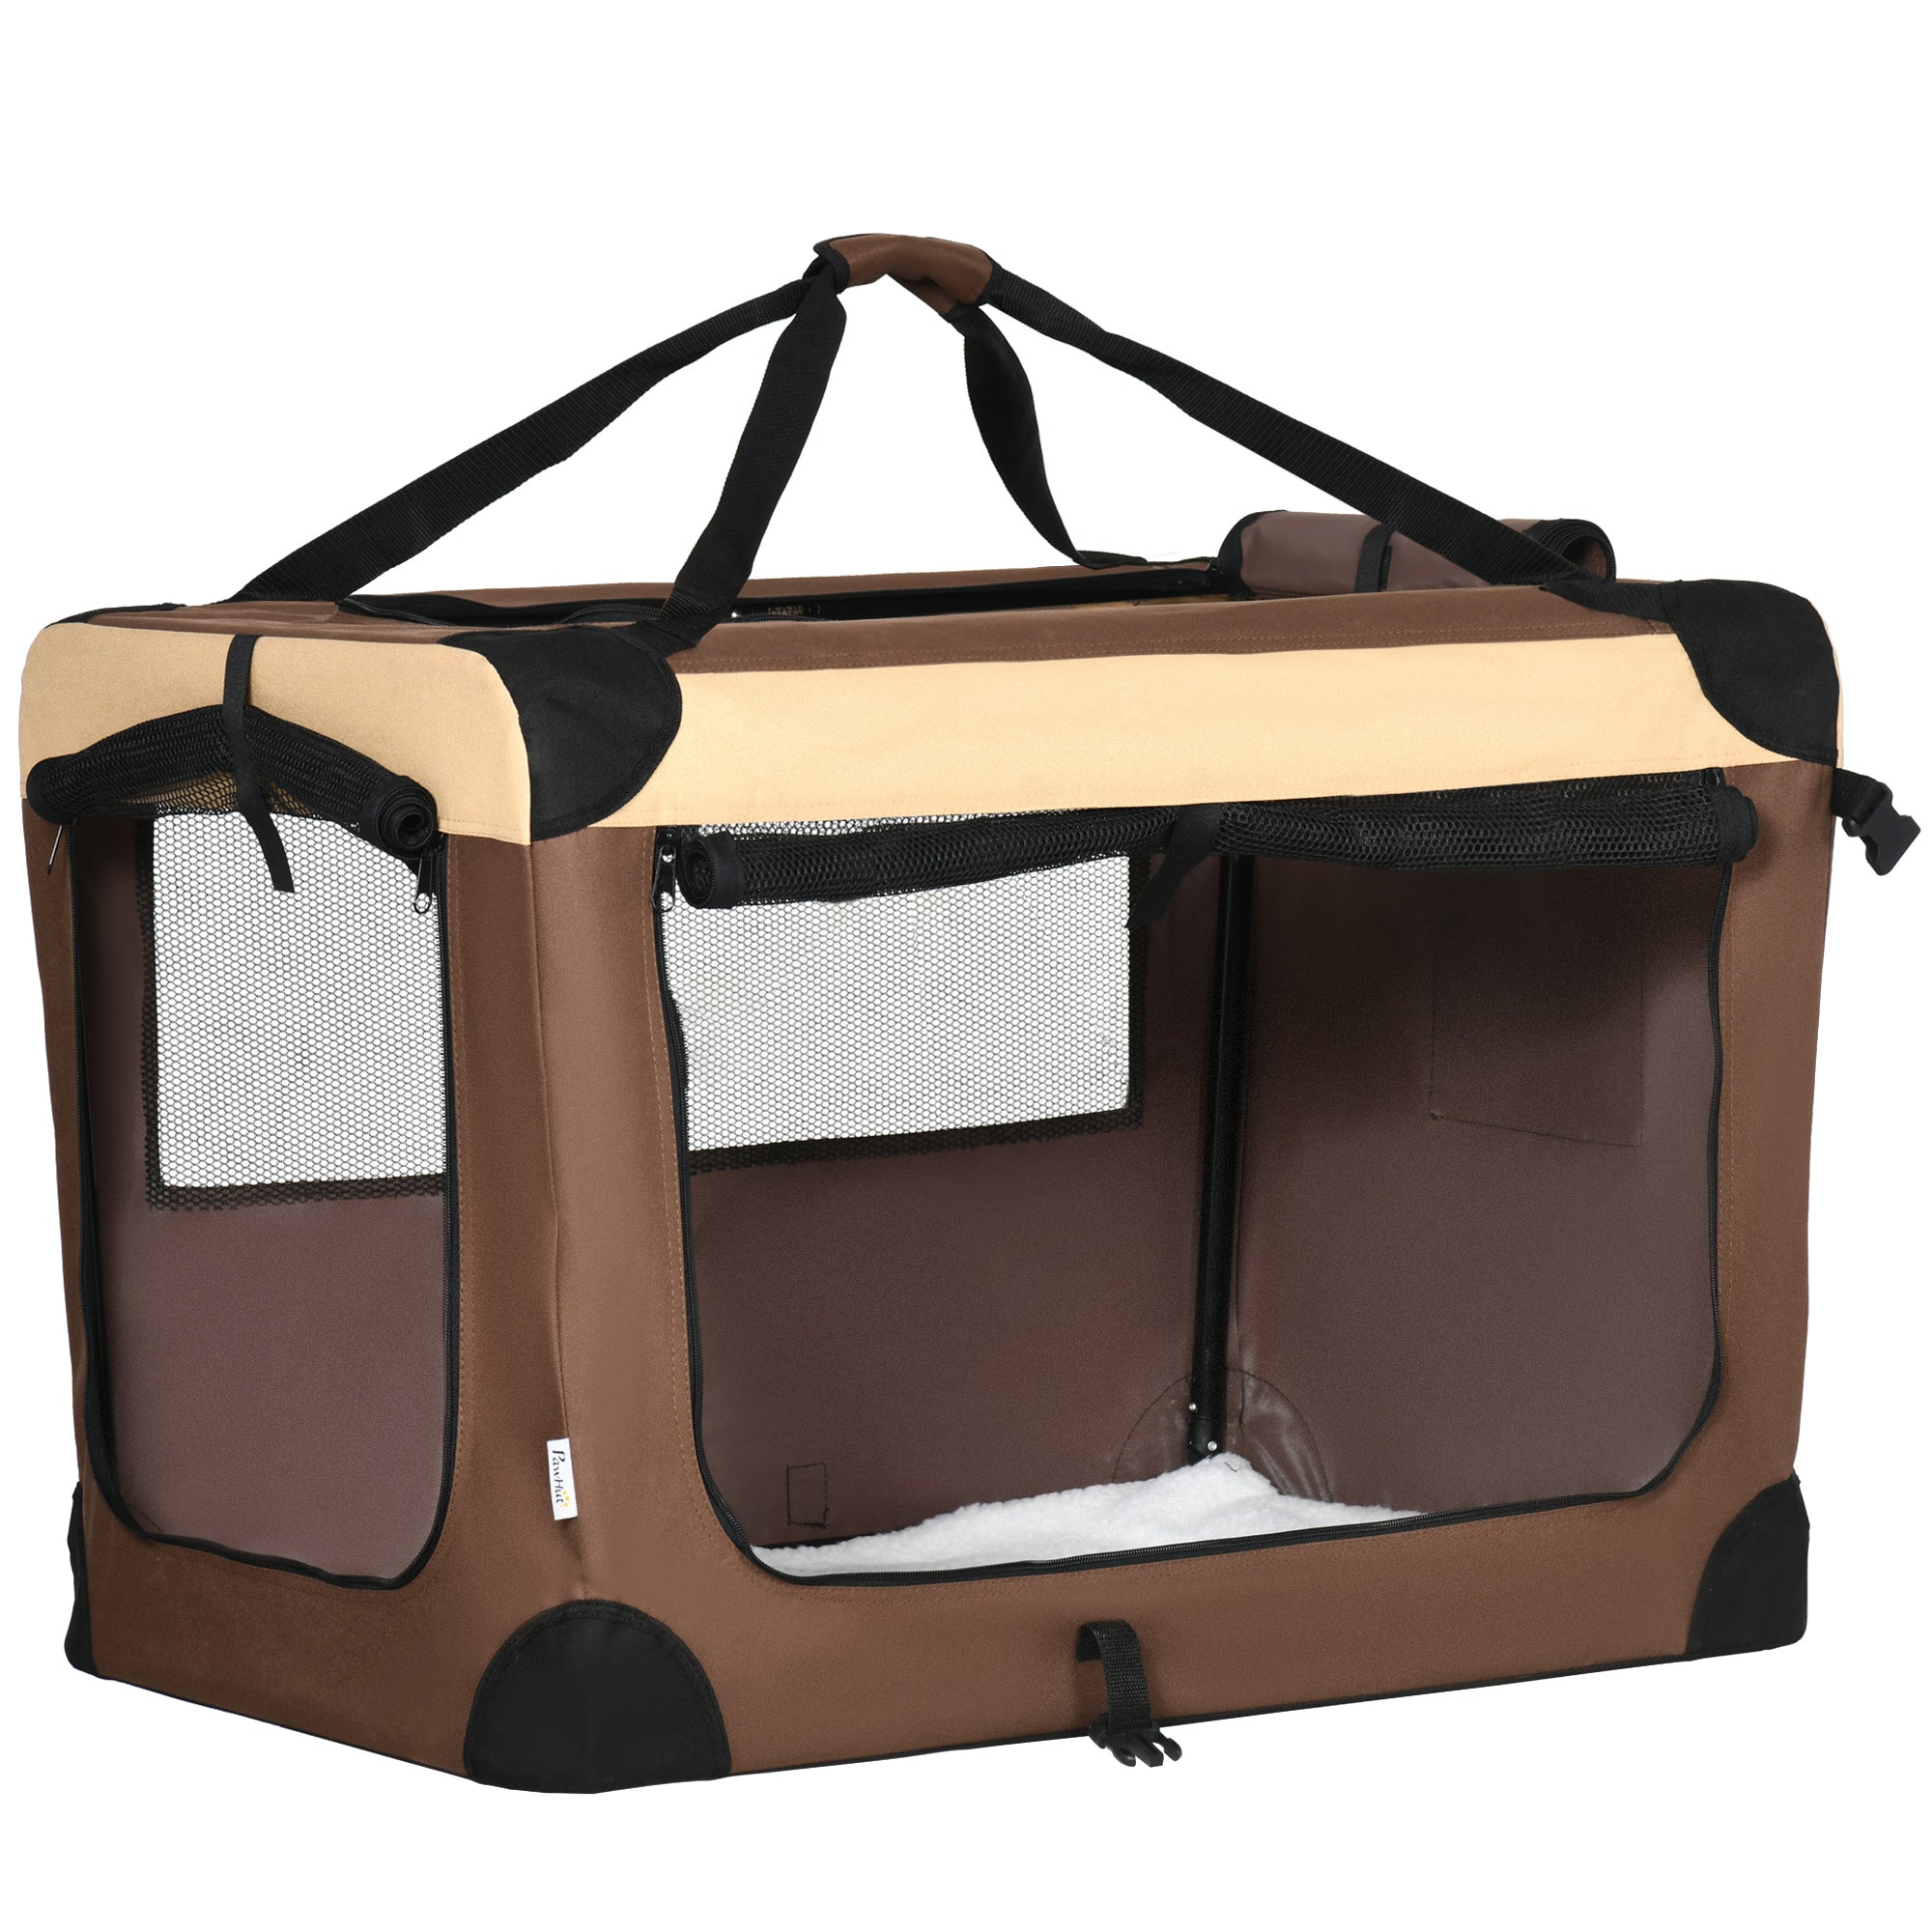 PawHut 81cm Foldable Pet Carrier Bag Soft Travel Dog Crate for Medium Dogs Brown  | TJ Hughes